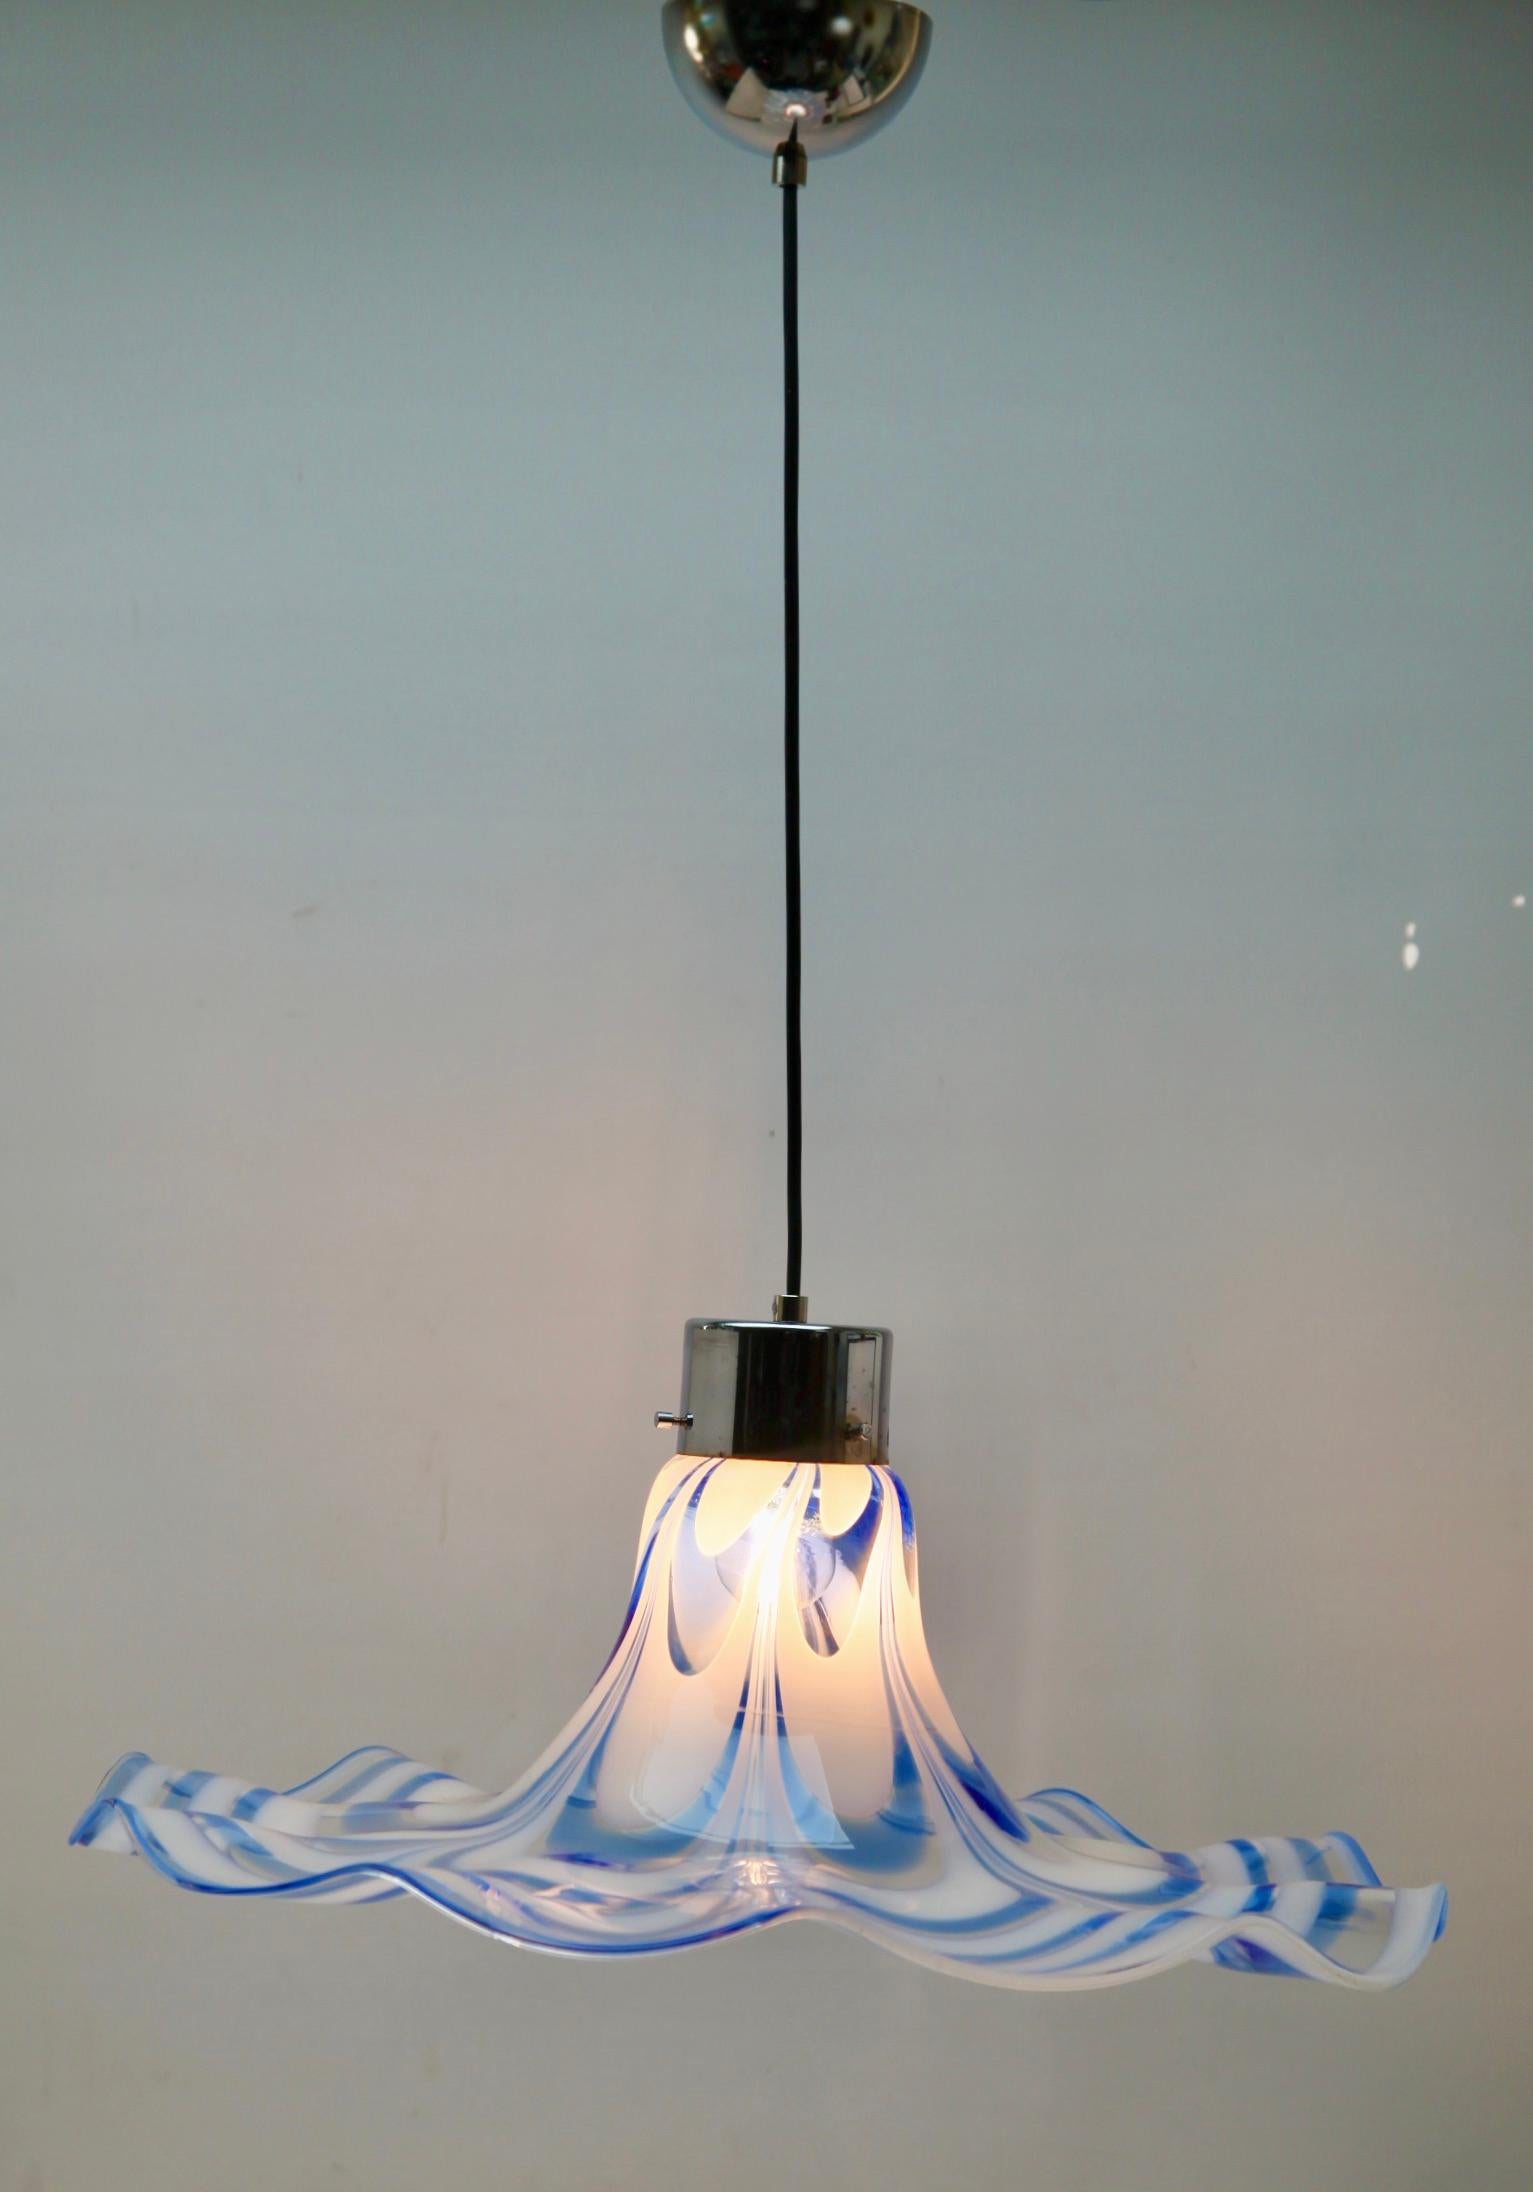 Italian Mid-Century Modernist, Large Murano Pendant Lamp, Style of Carlo Nason 1960s